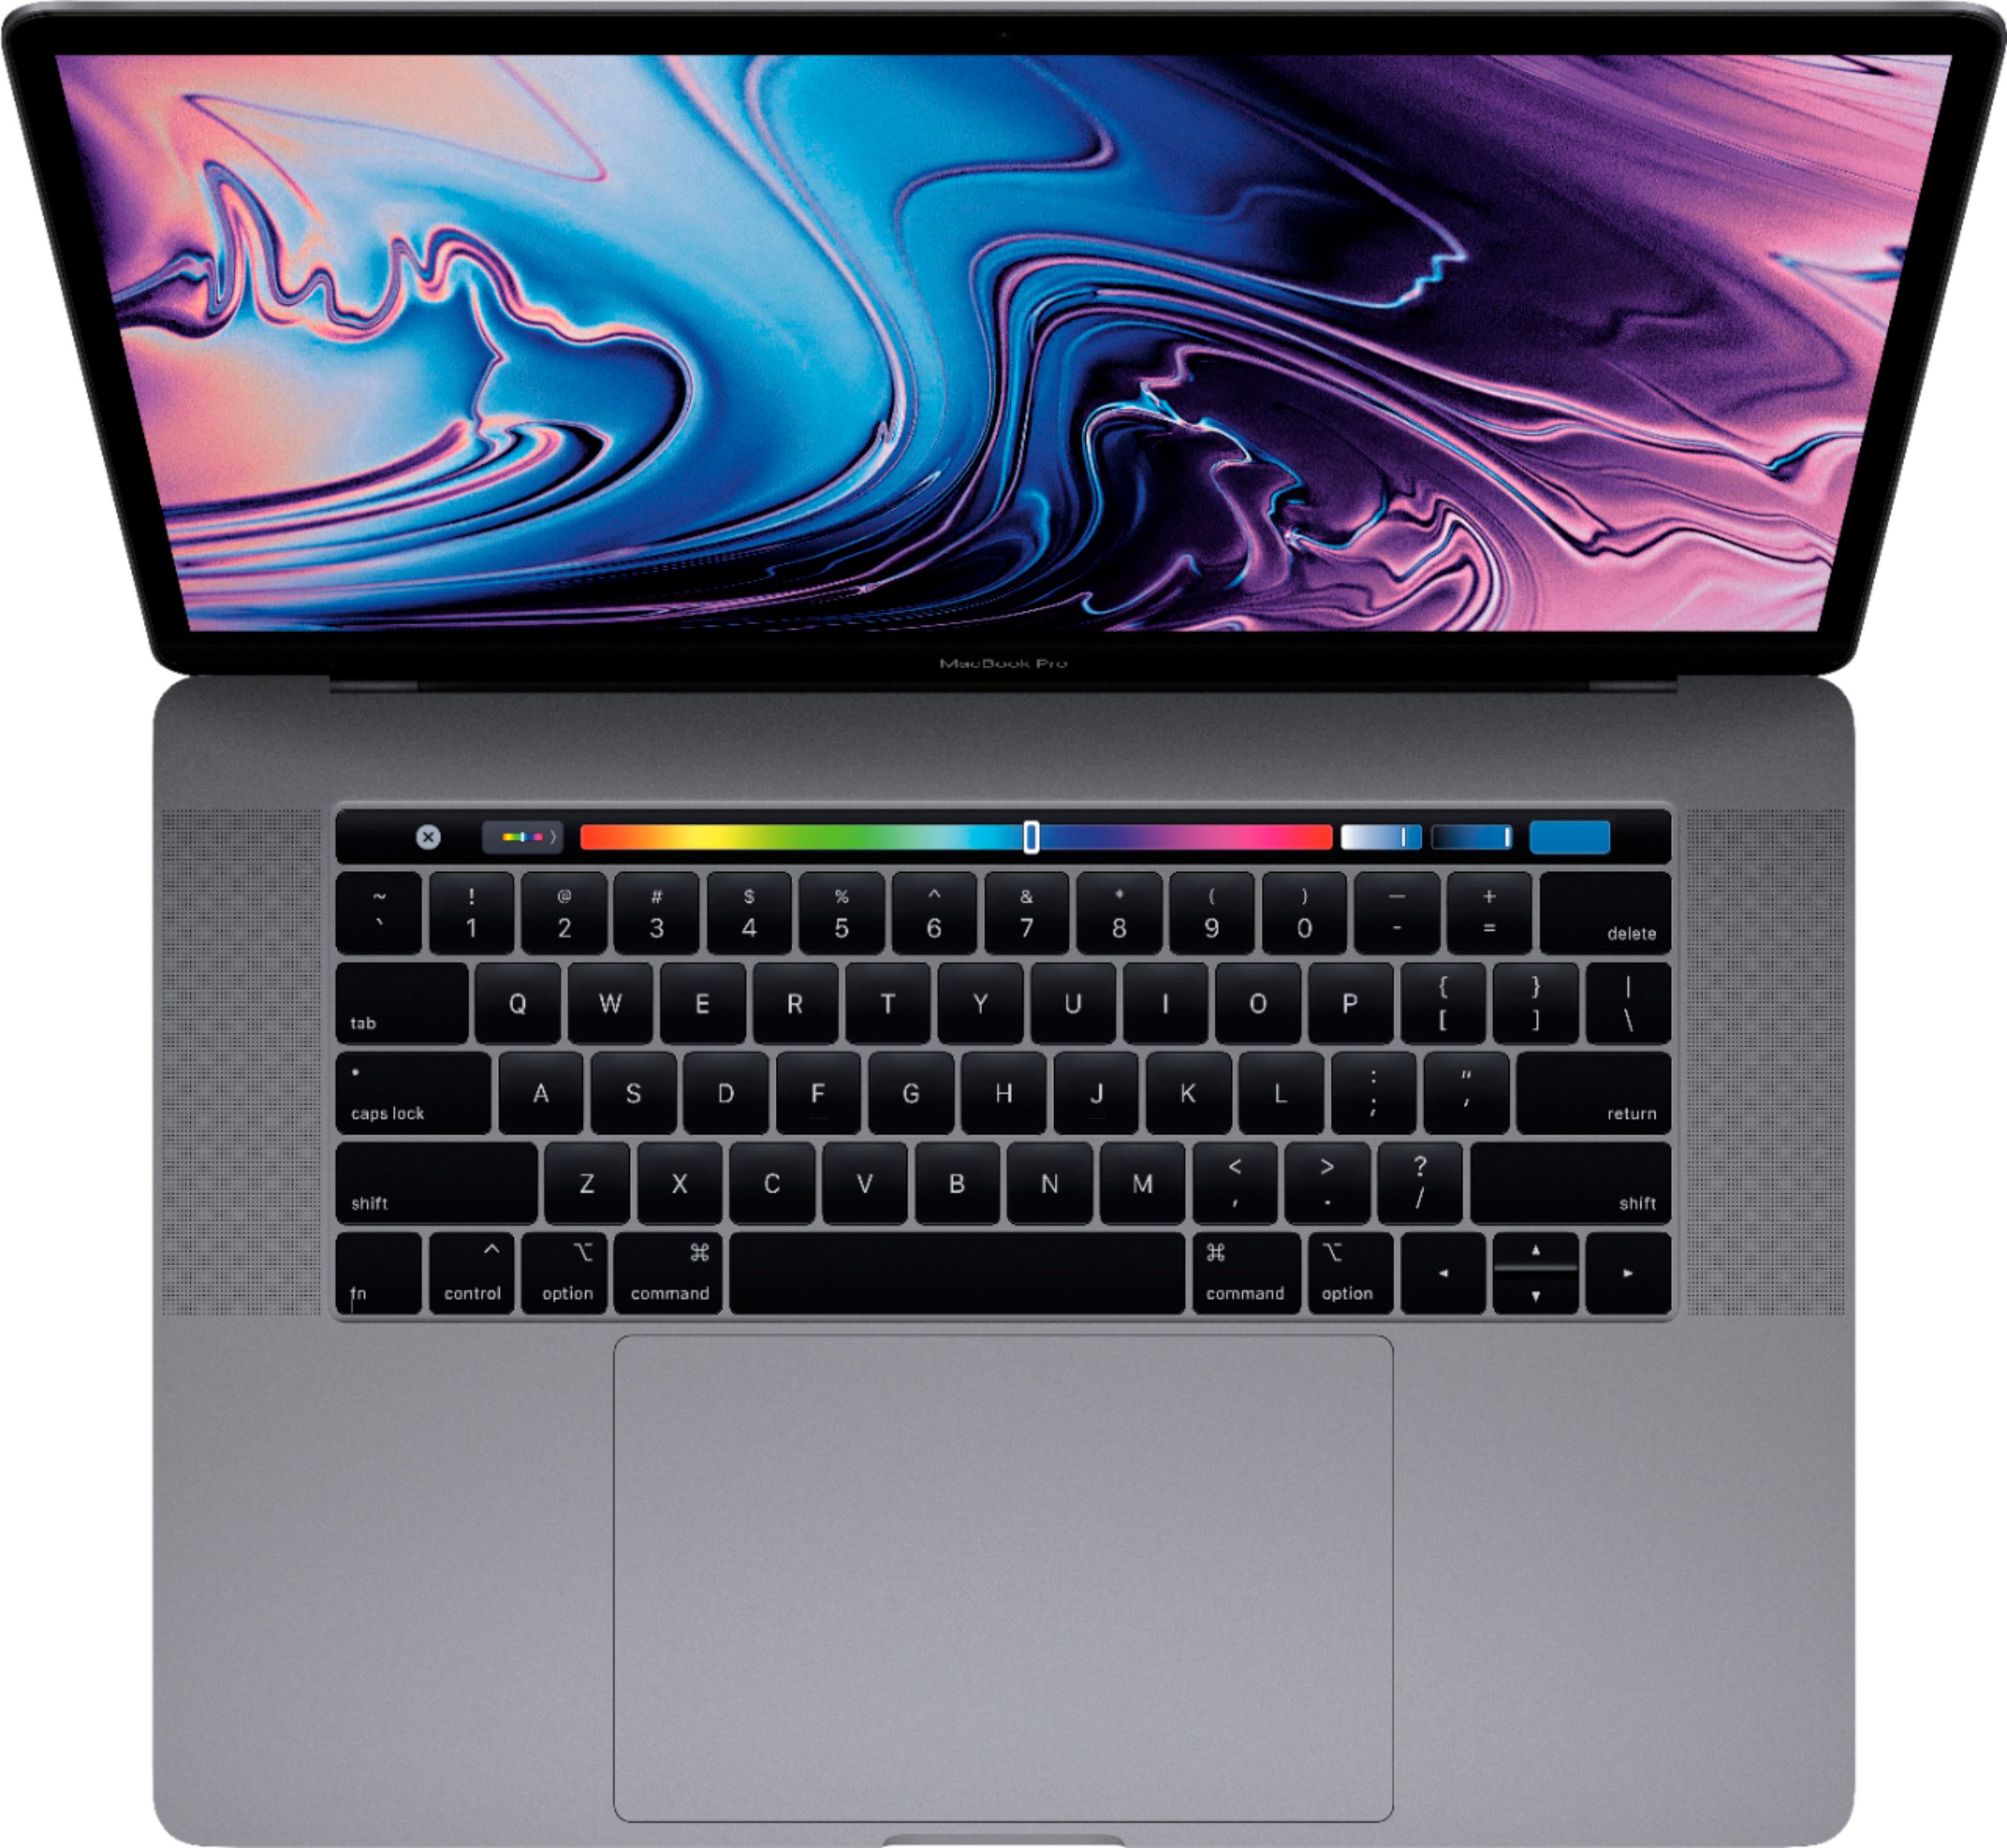 rendering ubehageligt Vedrørende Apple Refurbished MacBook Pro 15" Display with Touch Bar Intel Core i7 16GB  Memory AMD Radeon Pro 560X 512GB SSD Space Gray GSRF MR942LL/A - Best Buy